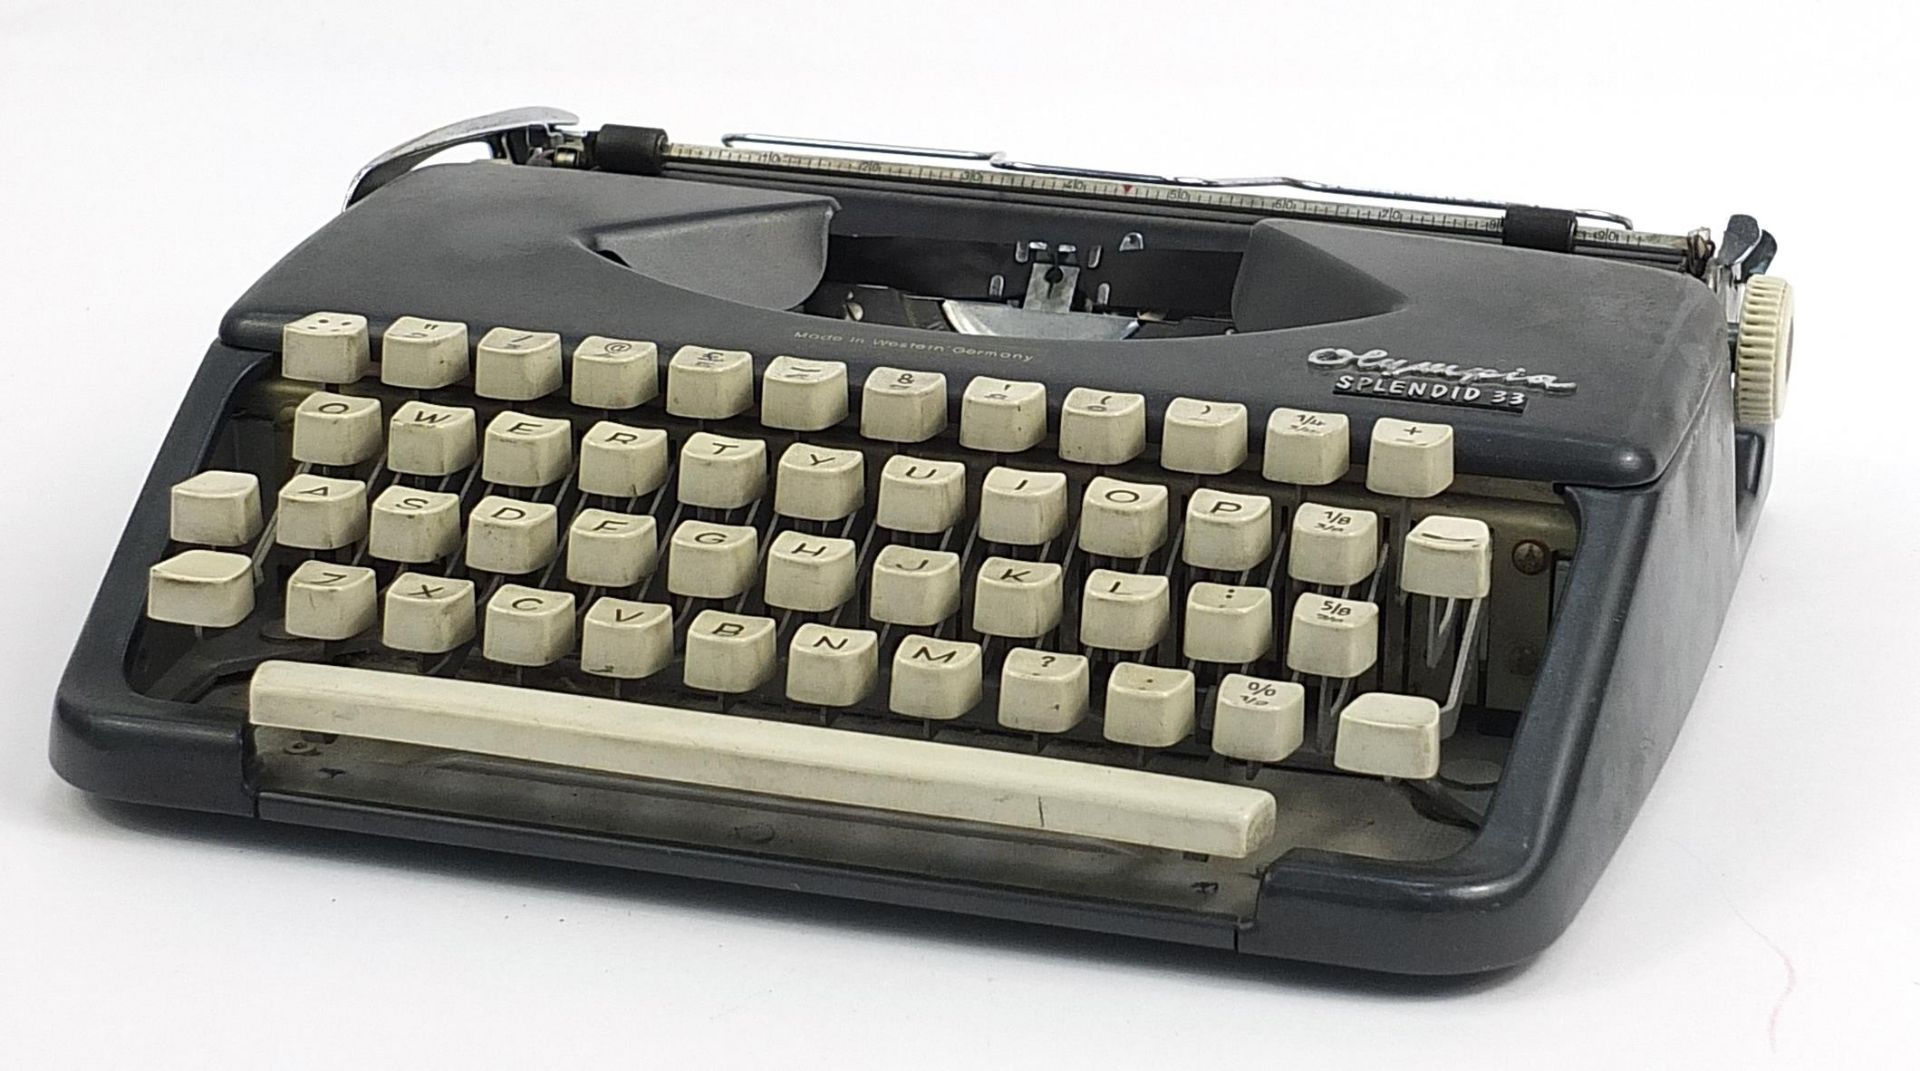 Olympia Splendid 33 typewriter